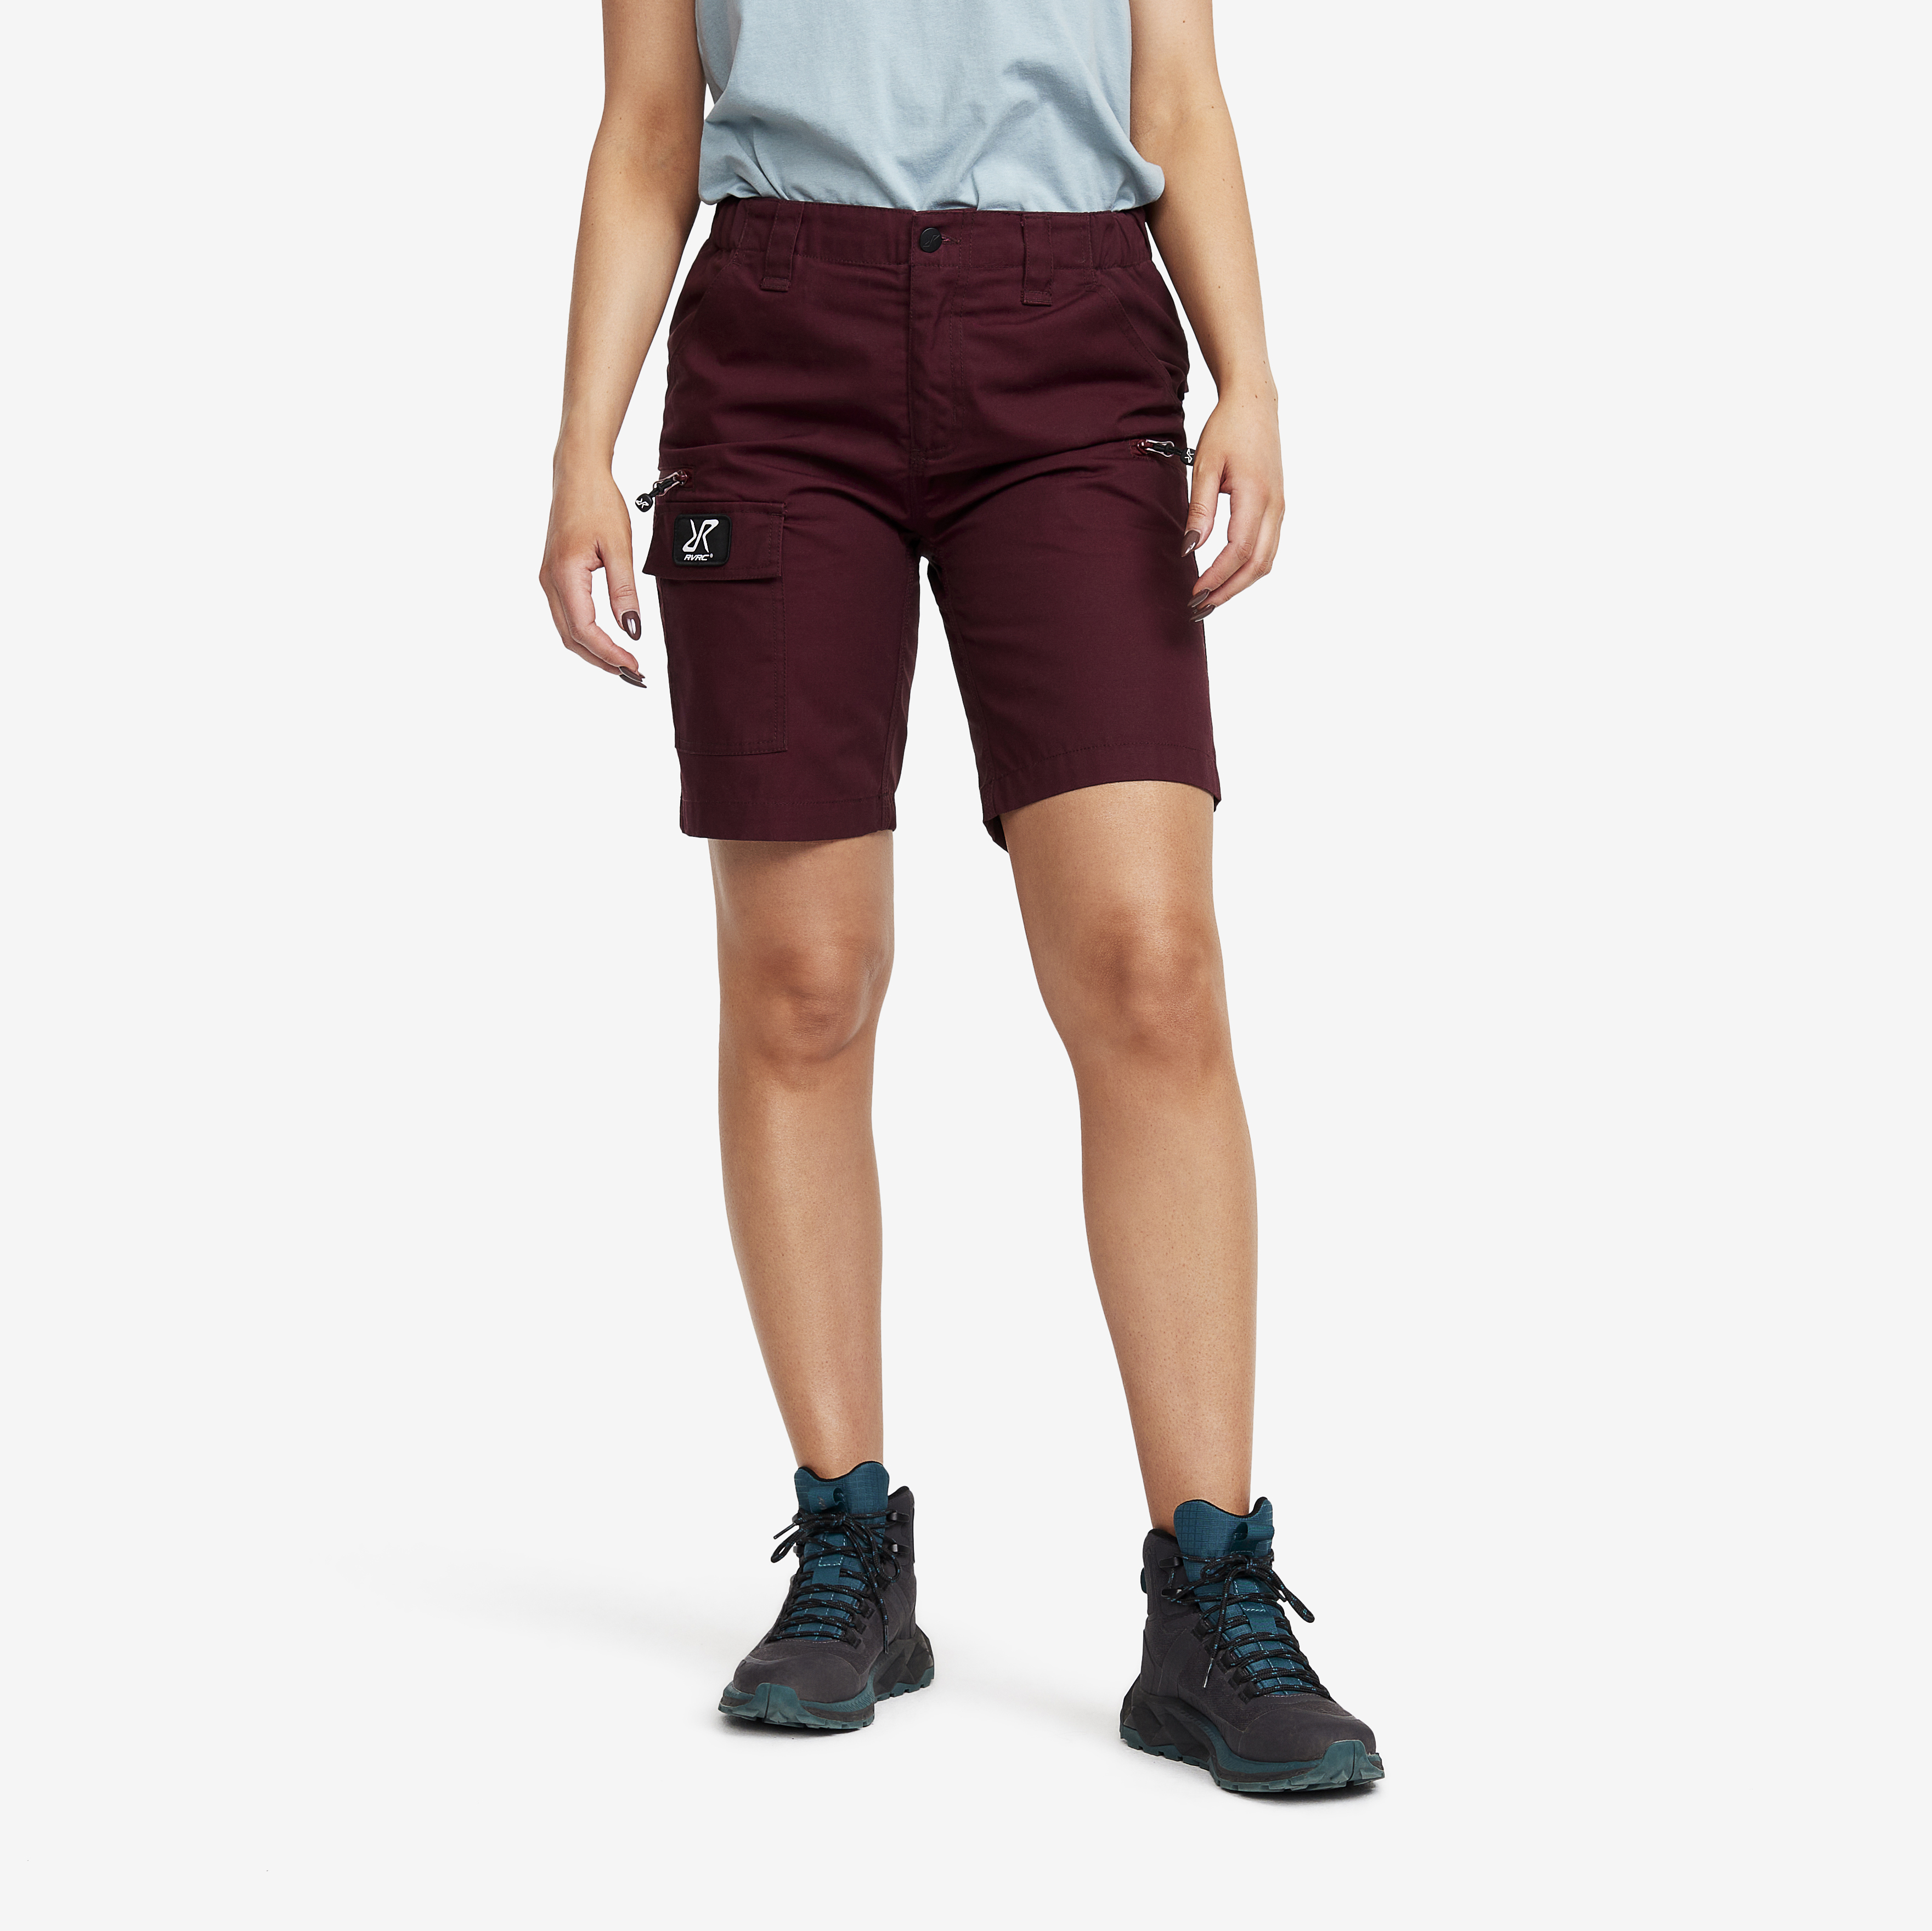 Nordwand shorts för dam i lila